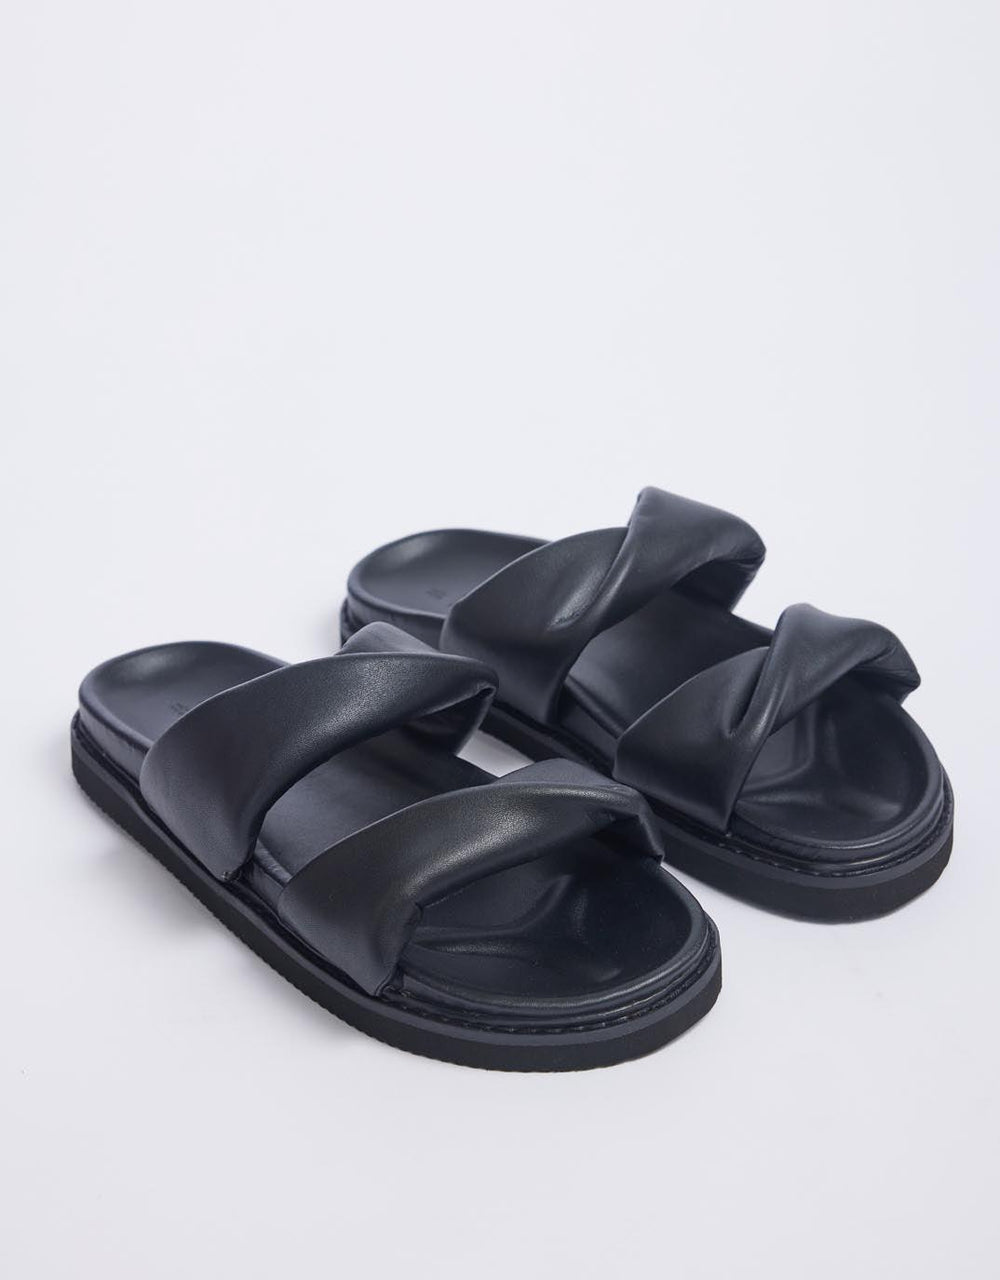 Human Shoes - Tactful Slides - Black - paulaglazebrook Shoes